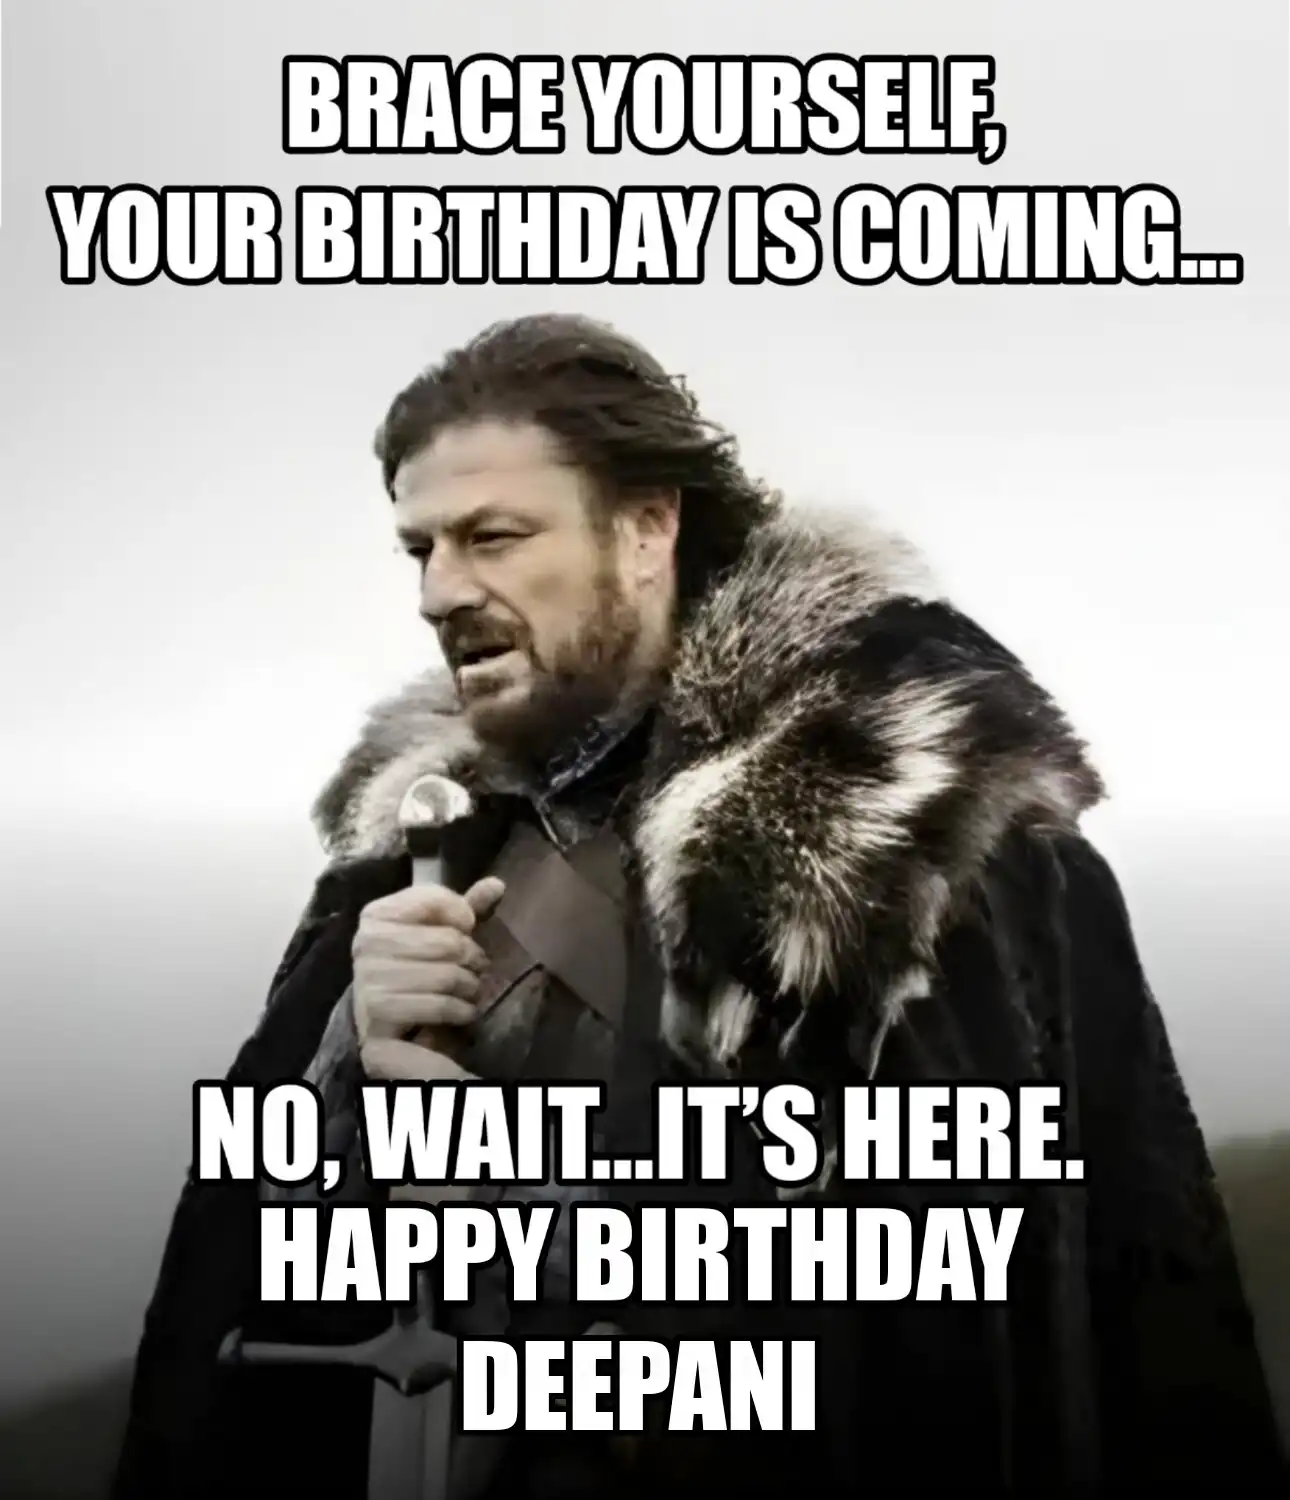 Happy Birthday Deepani Brace Yourself Your Birthday Is Coming Meme